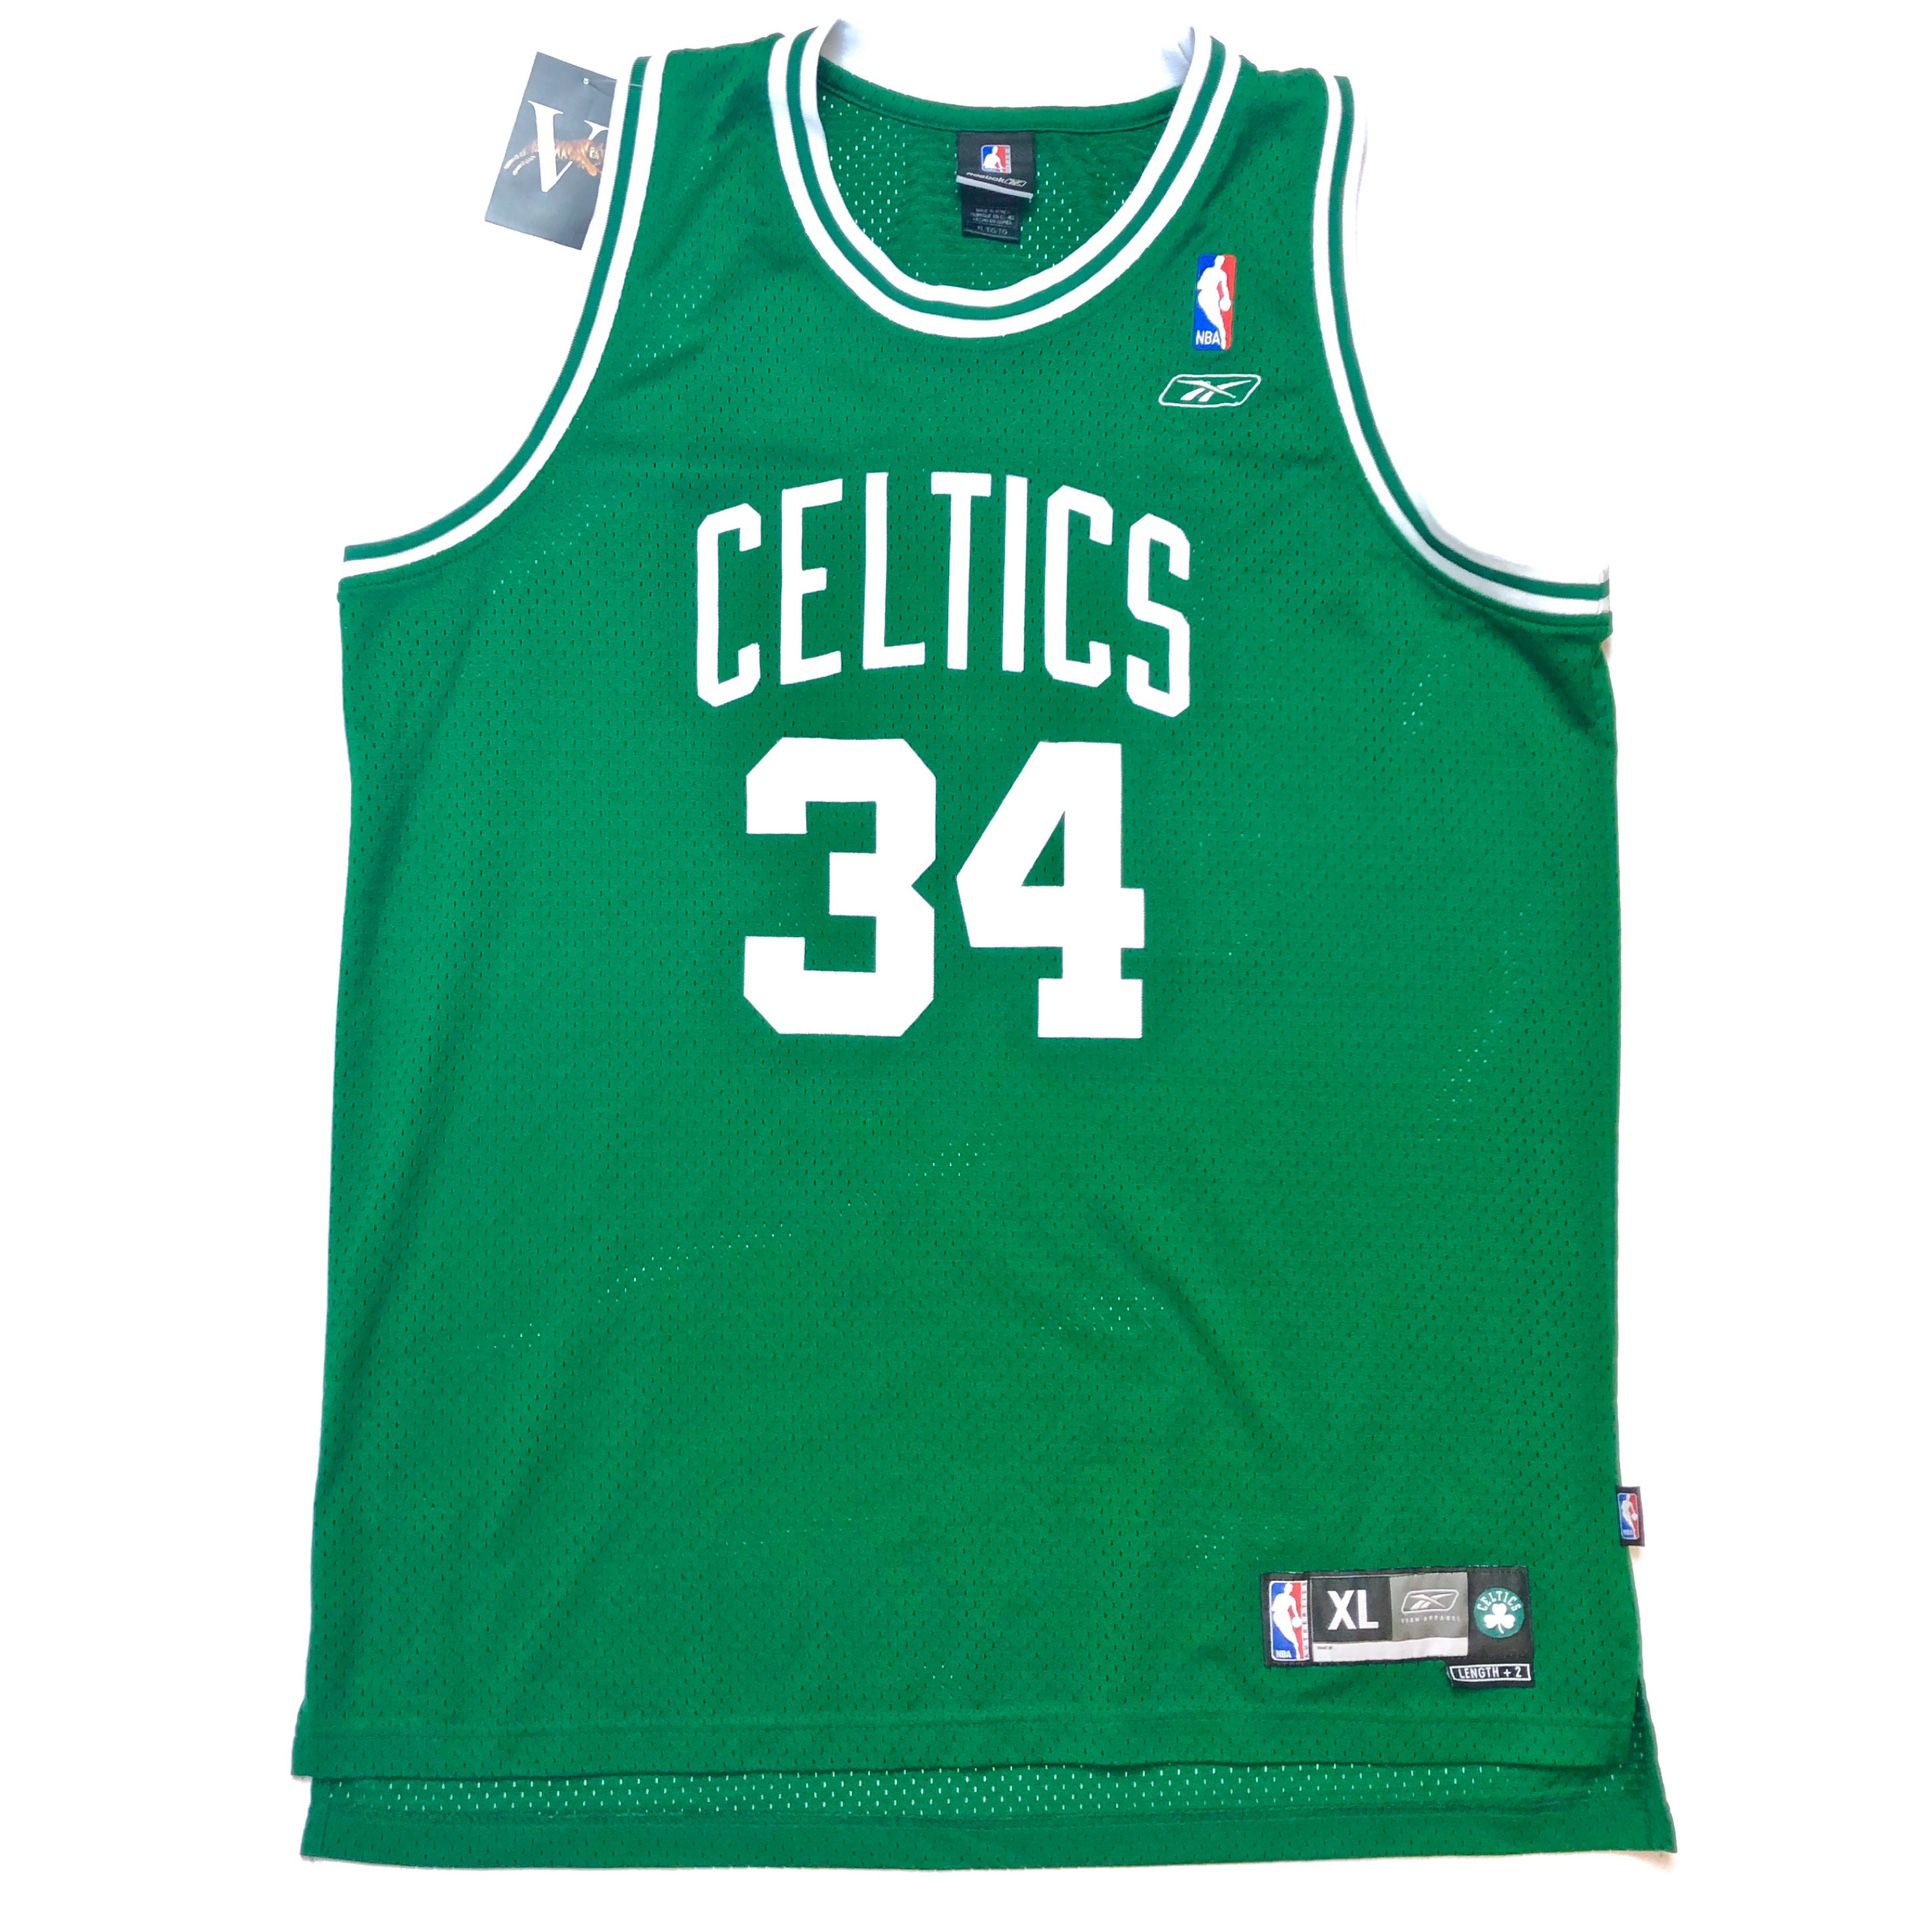 REEBOK Paul Pierce #34 NBA Green Boston Celtics Basketball Jersey Size XL